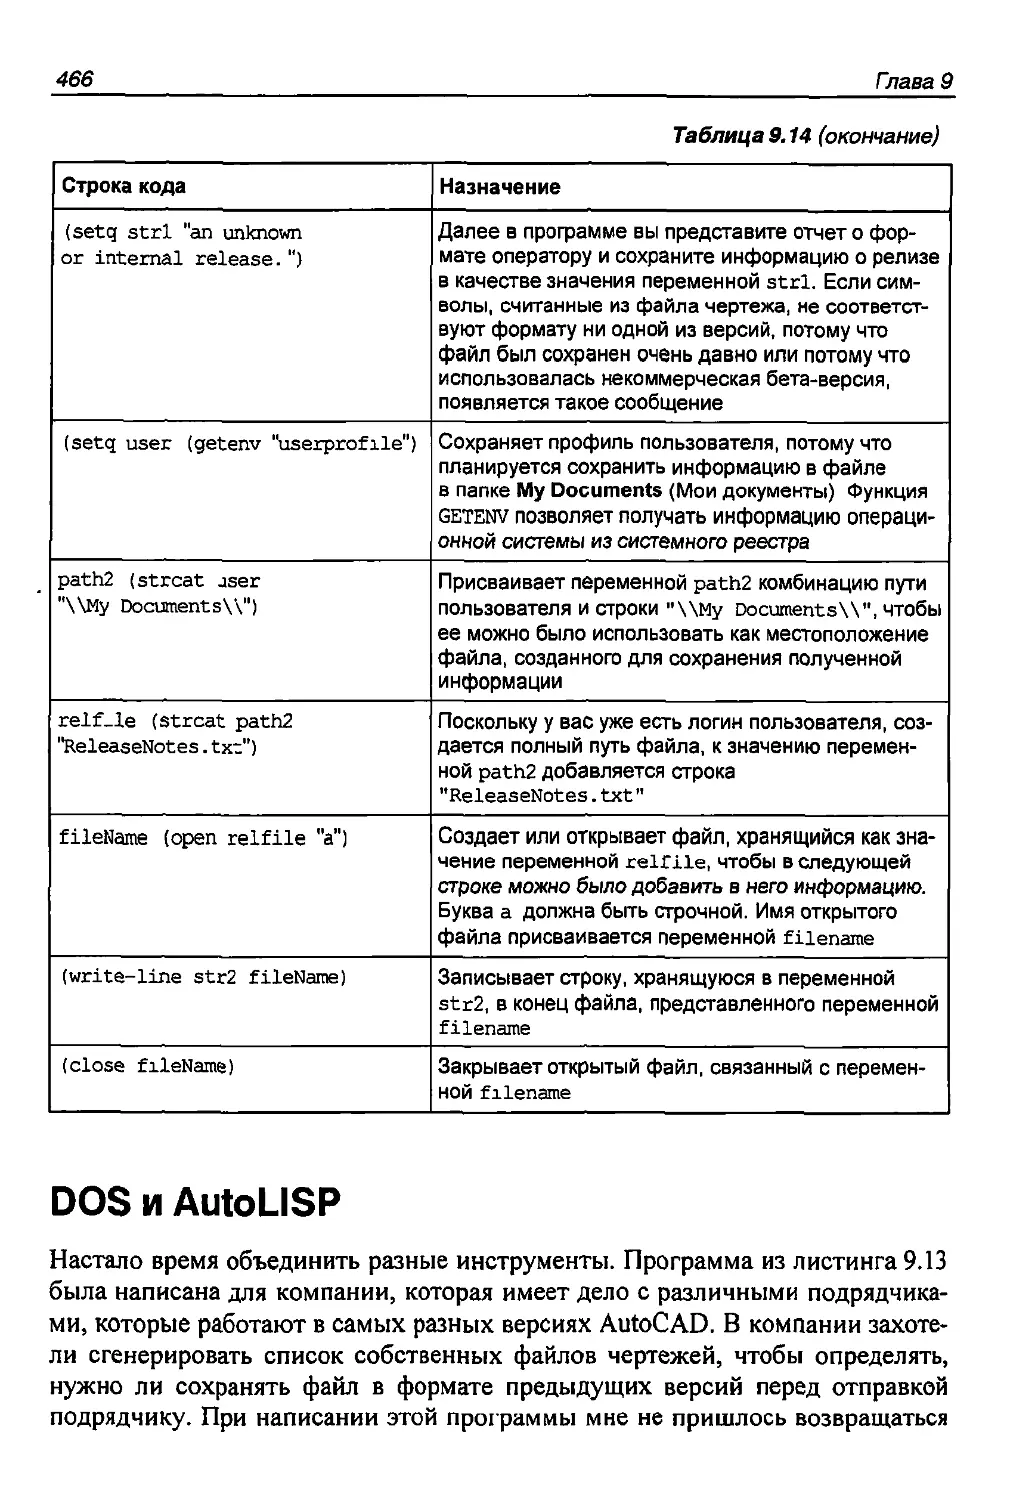 DOS и AutoLISP